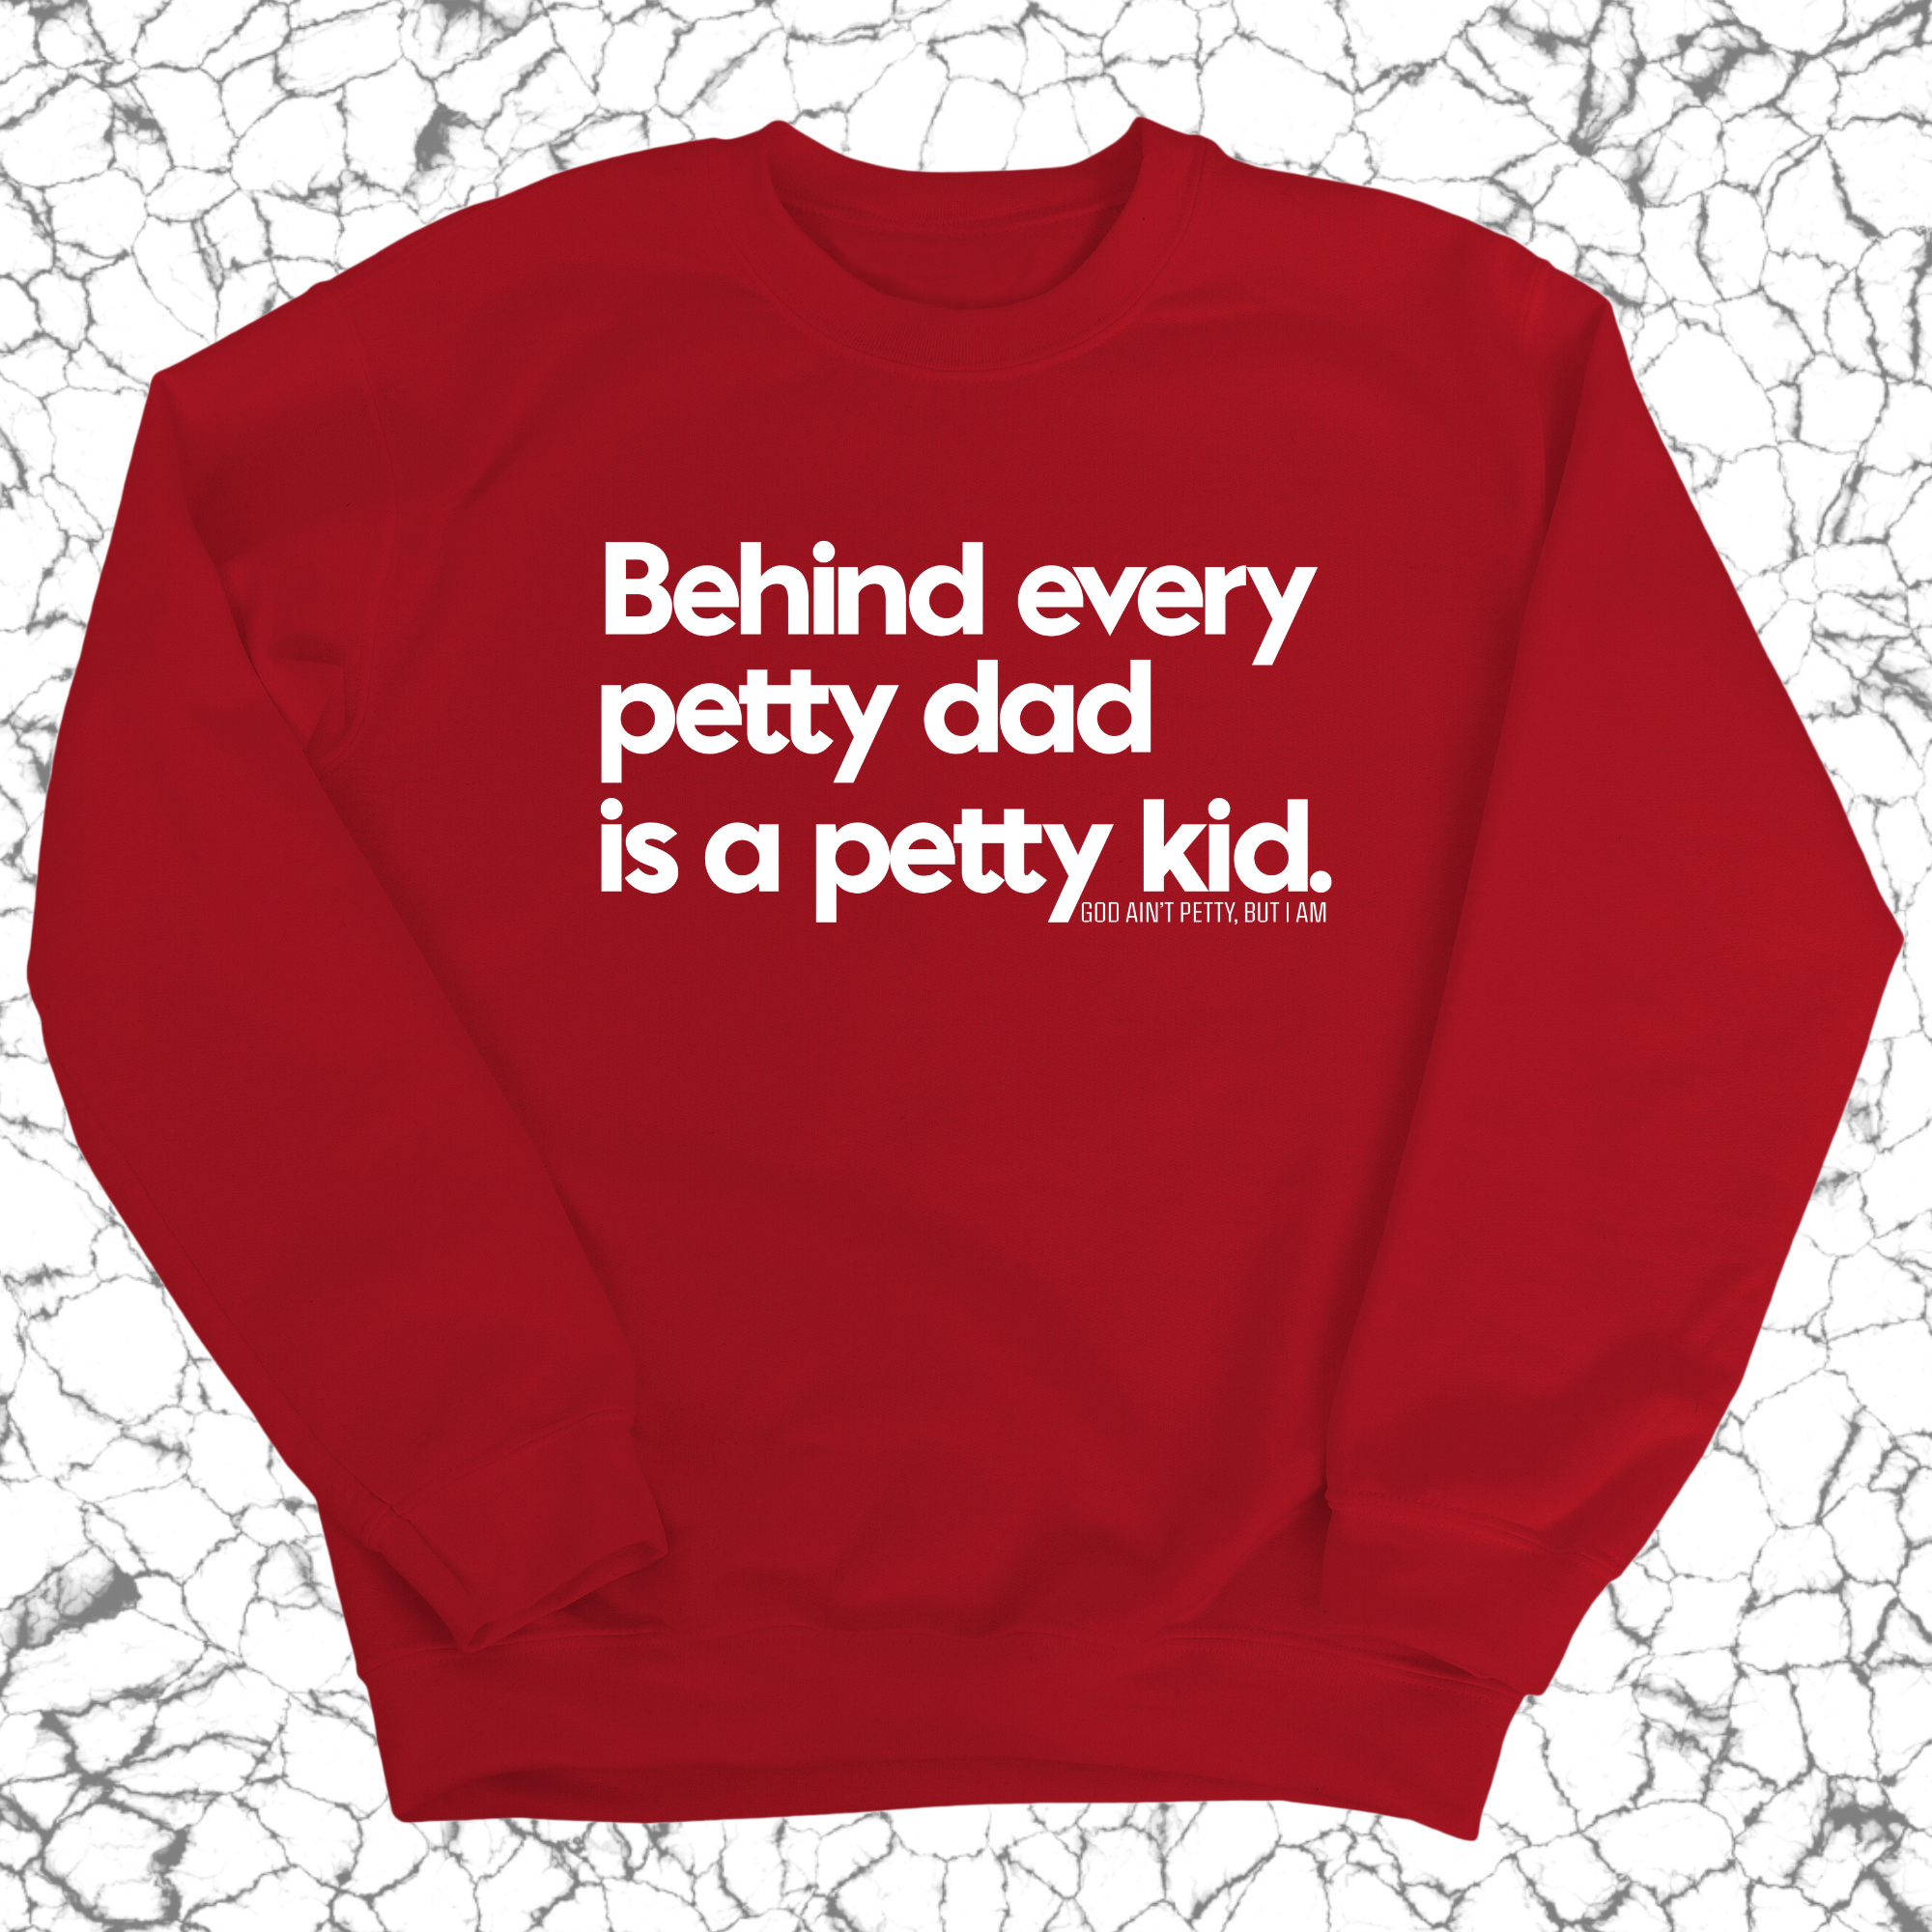 Behind every petty dad is a petty kid Unisex Sweatshirt-Sweatshirt-The Original God Ain't Petty But I Am